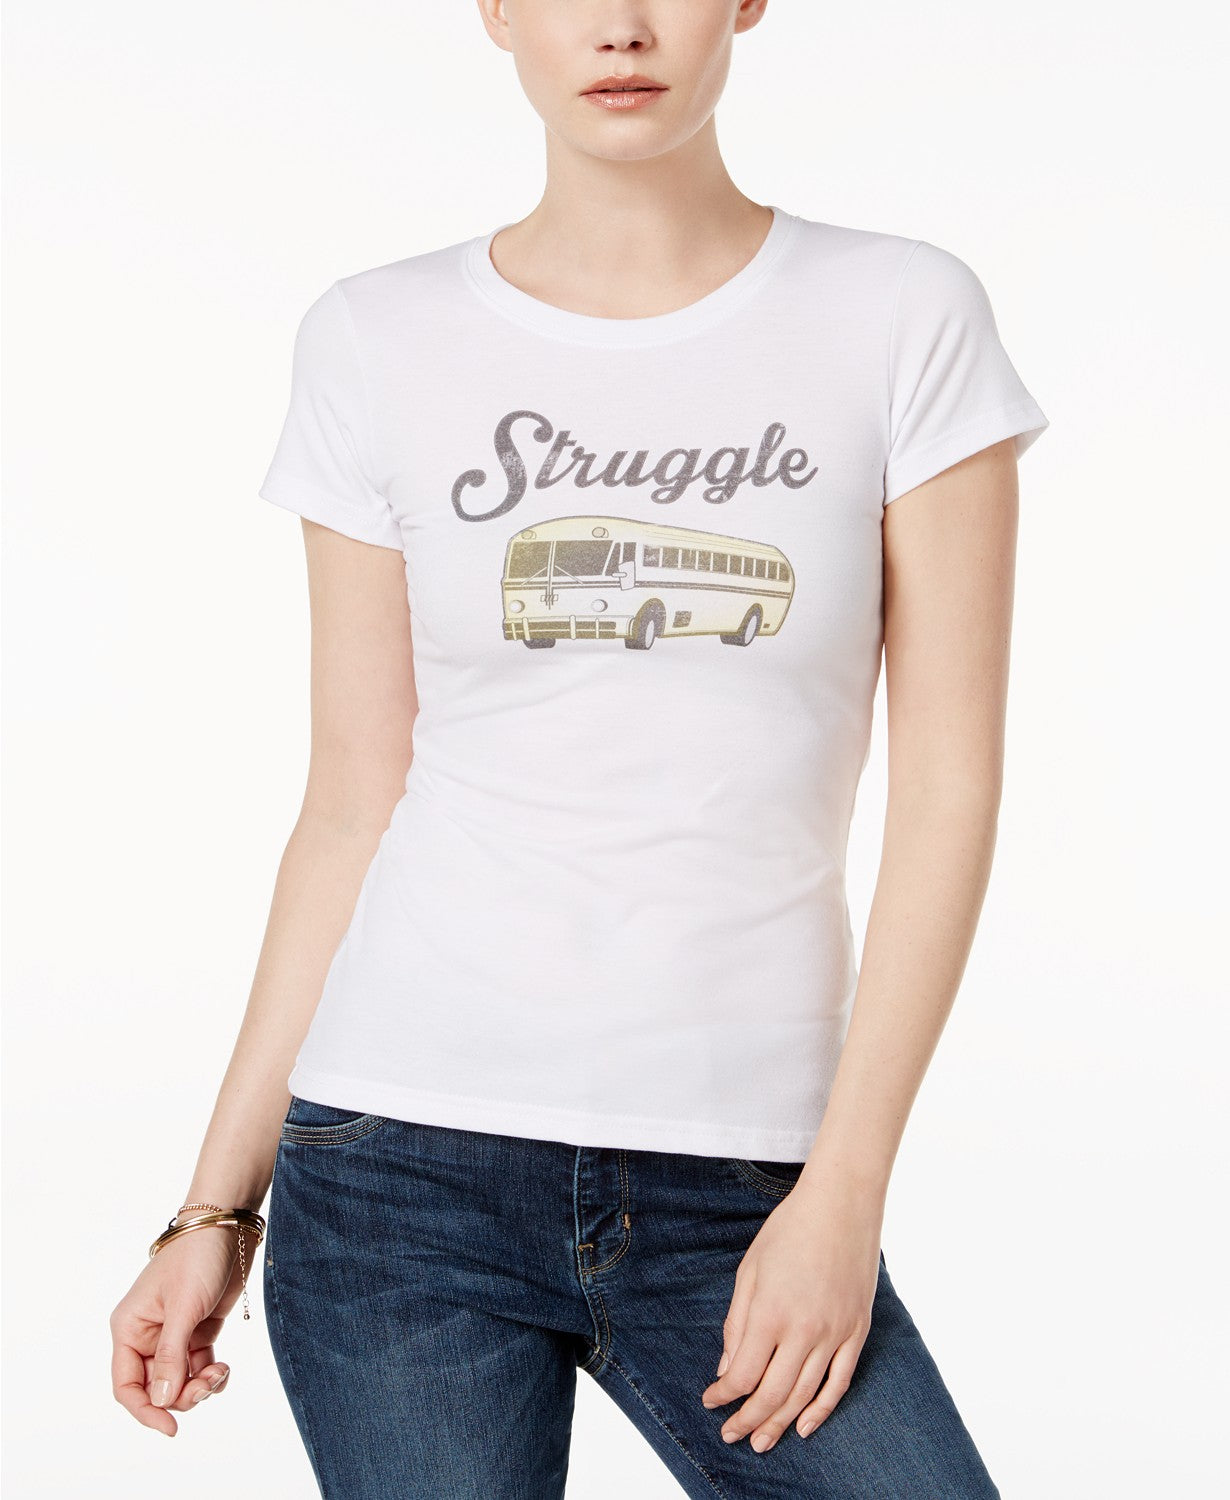 KID DANGEROUS Cotton Struggle Graphic T-Shir White M